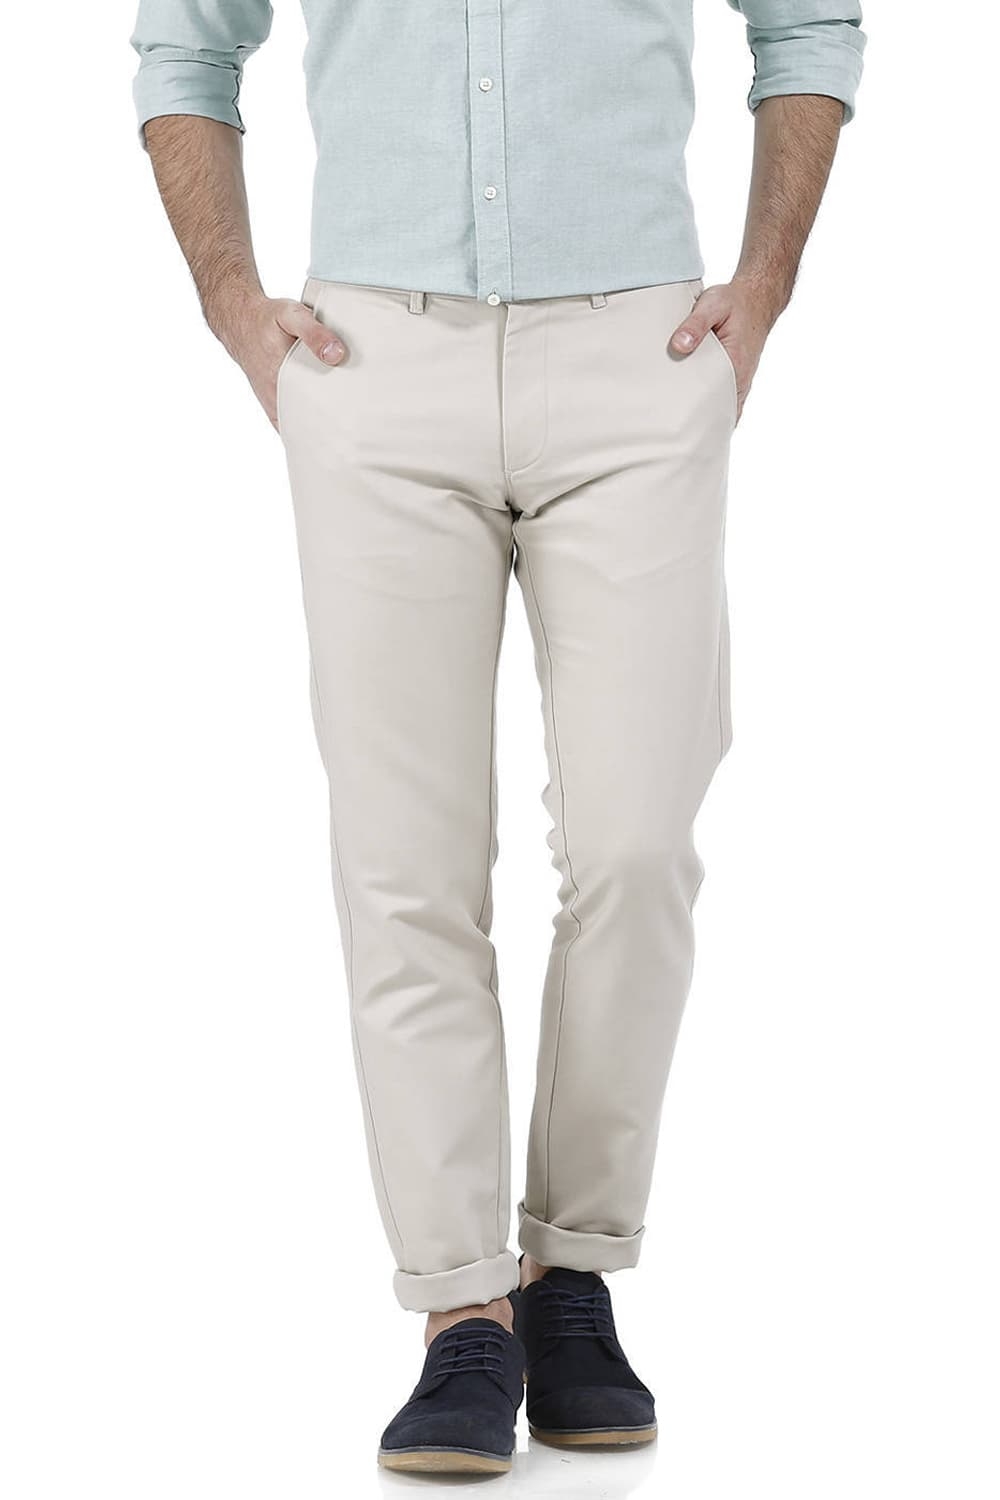 Basics | Basics Tapered Fit Sand Shell Cotton Trouser